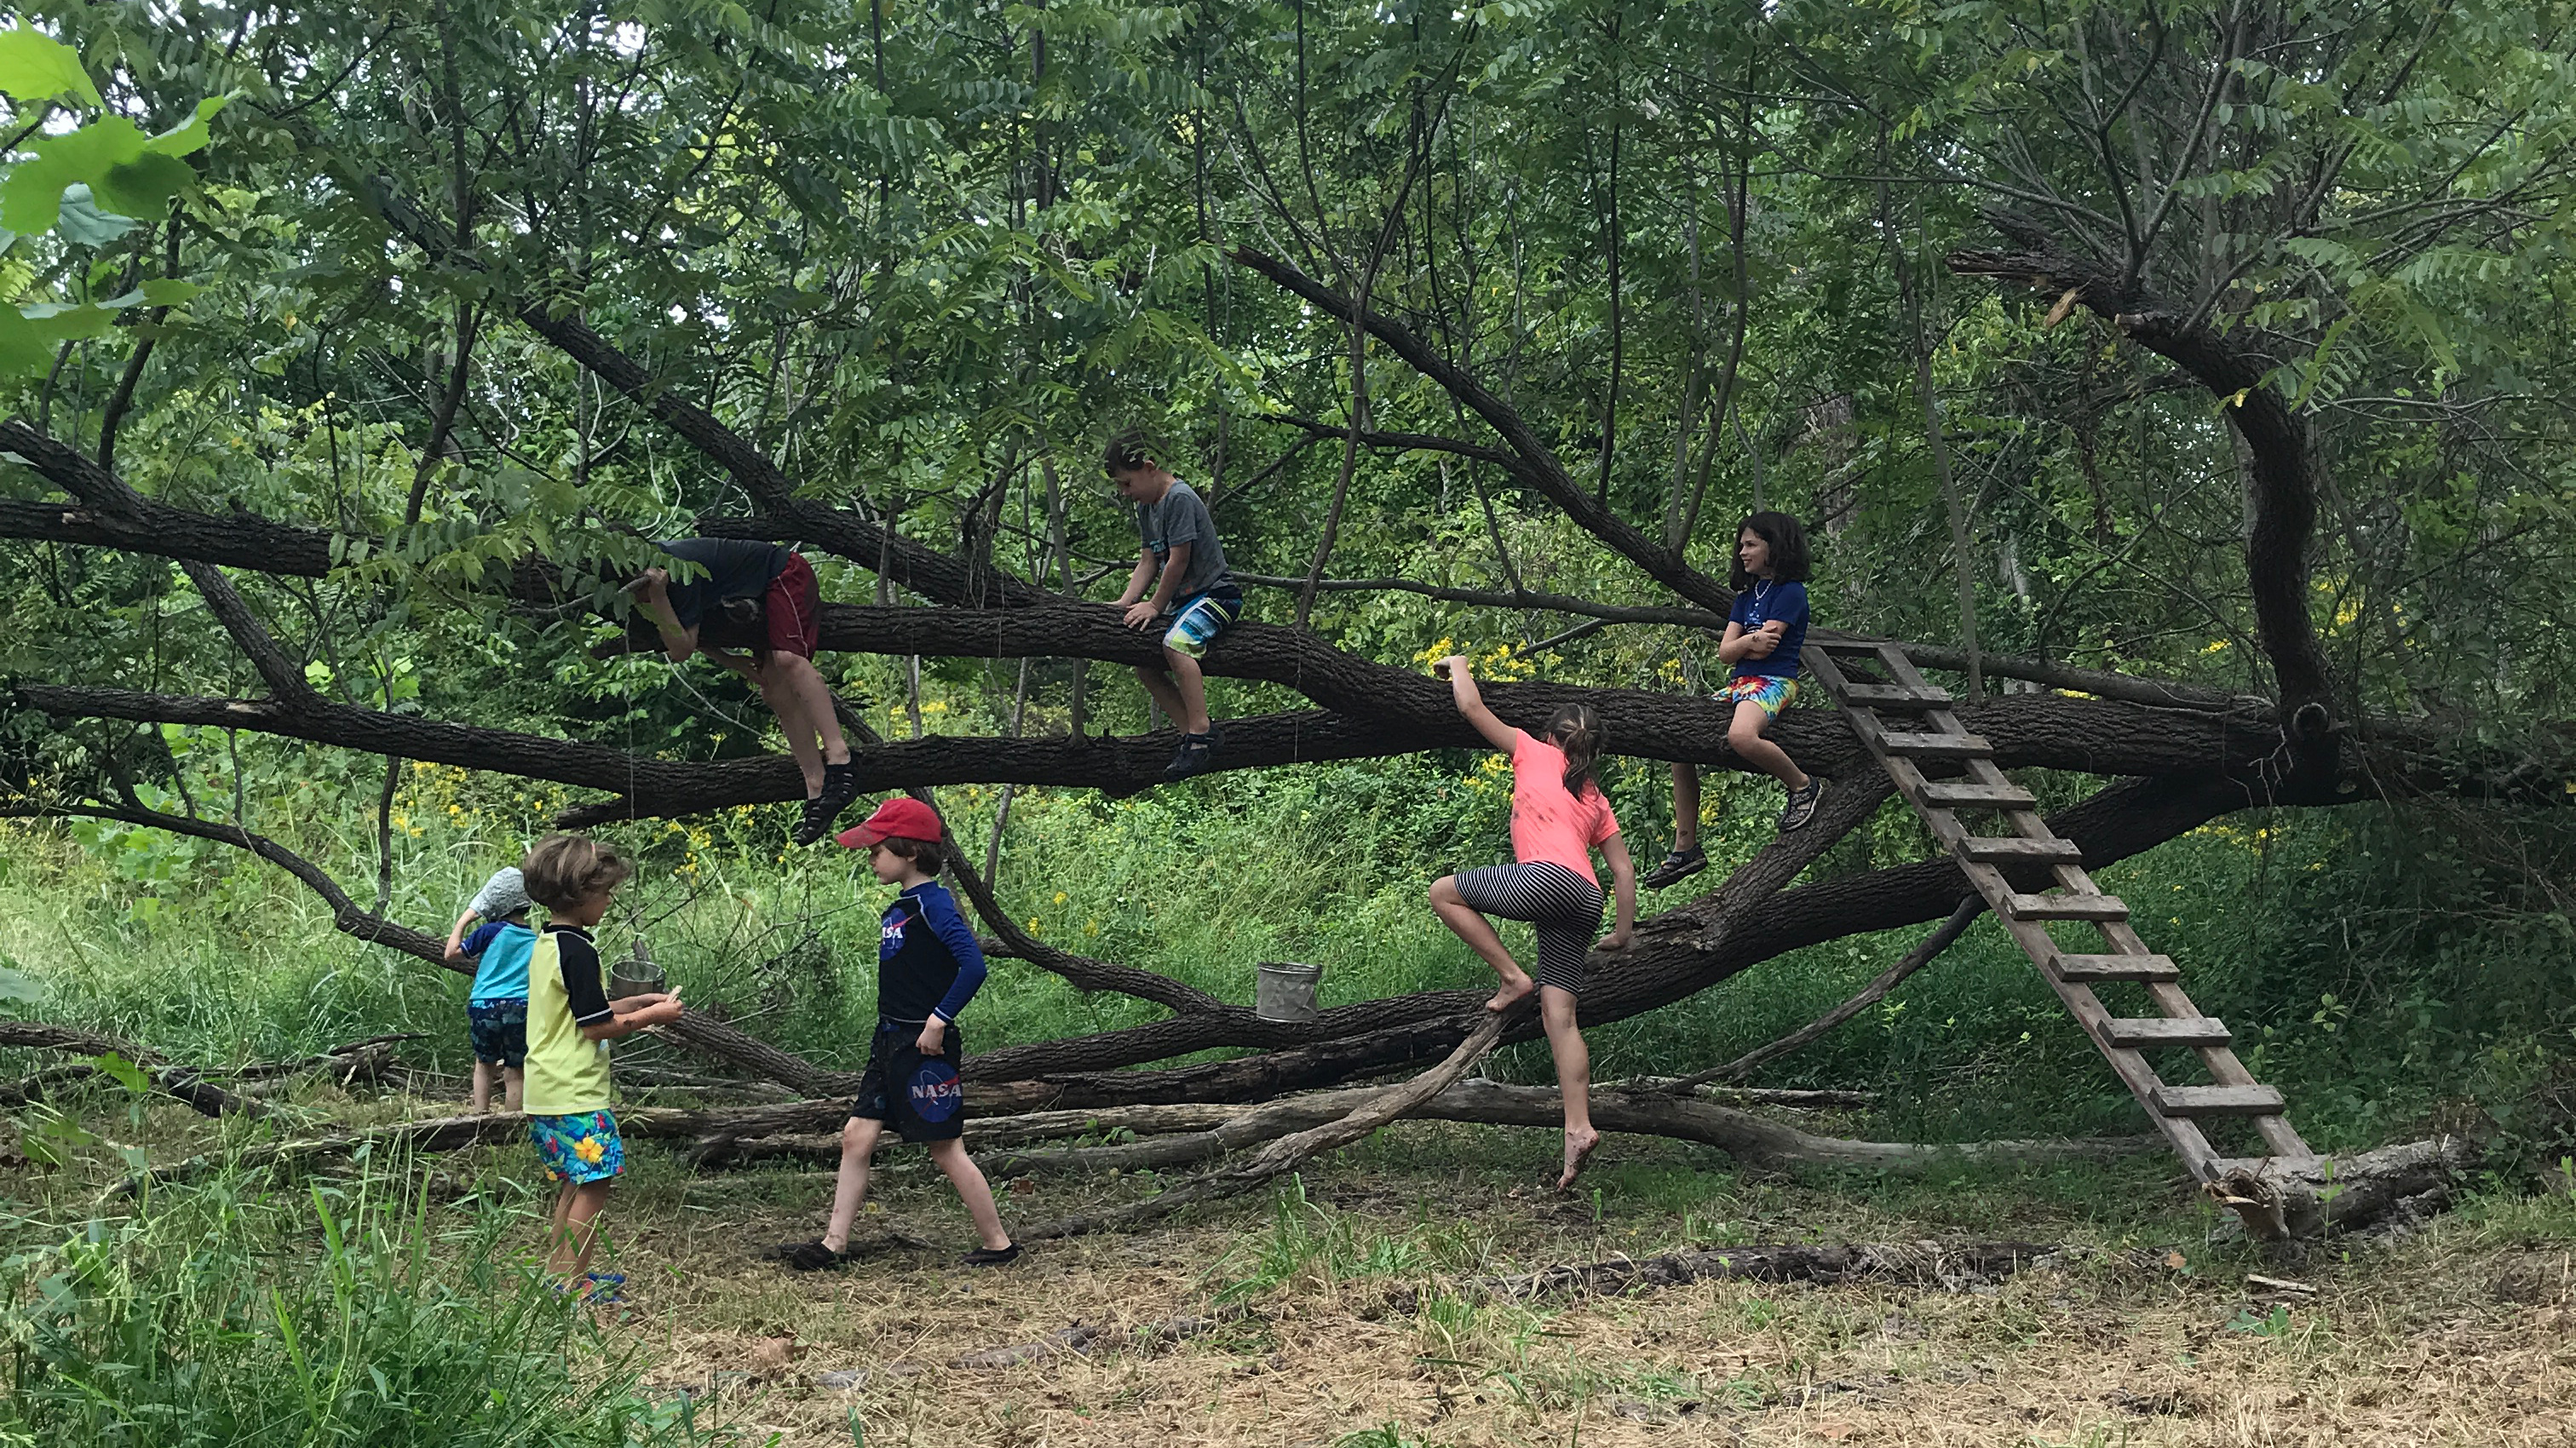 Children climbing on their favorite tree